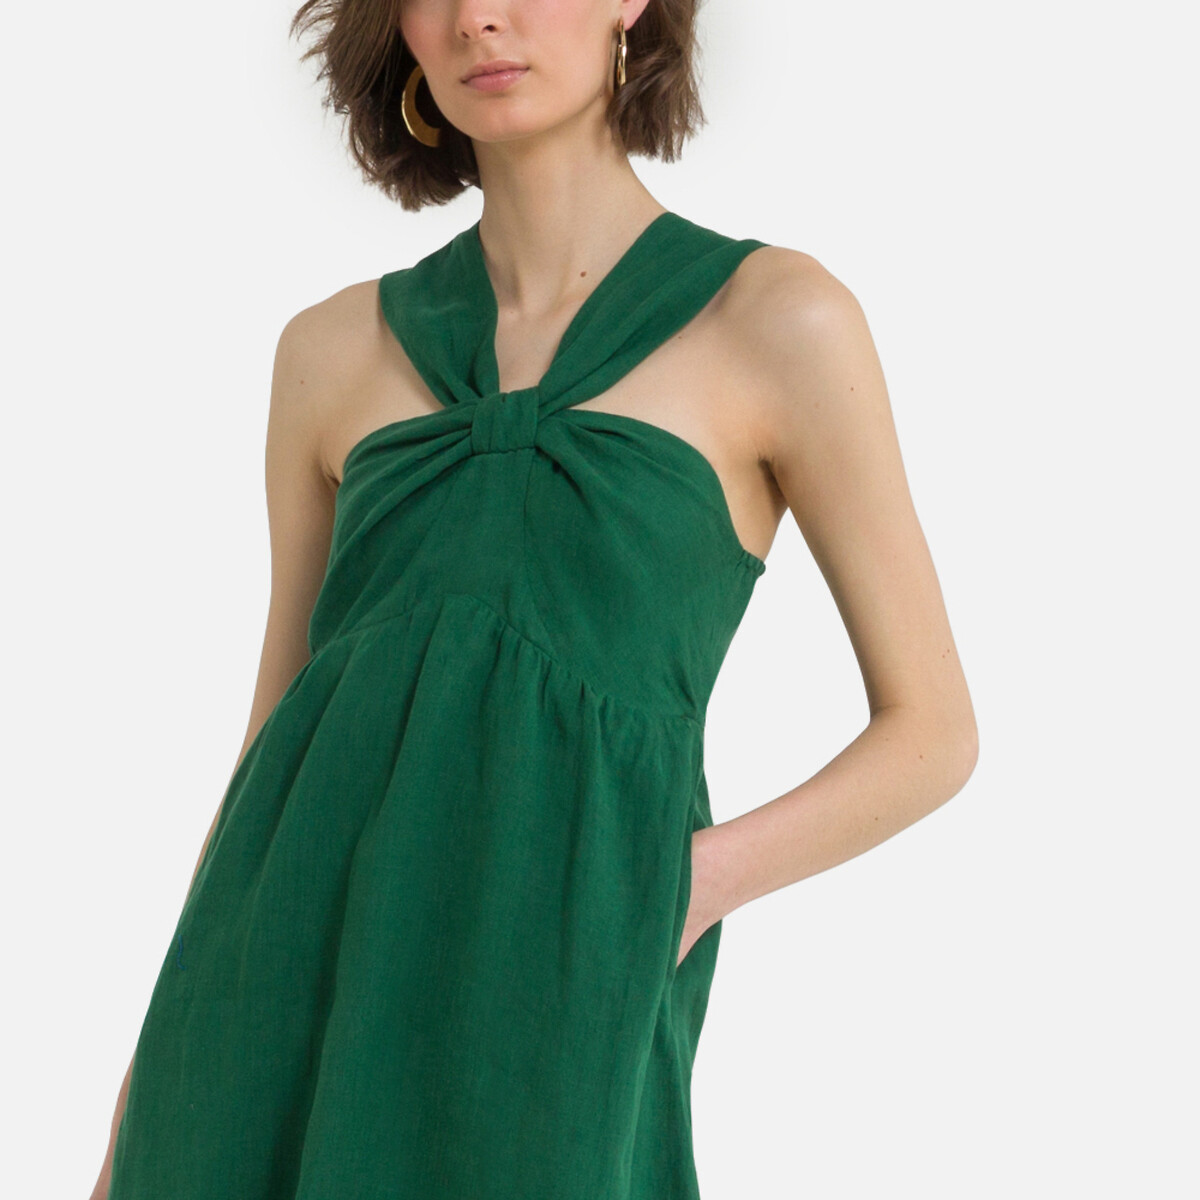 Платье SEE U SOON Длинное с бретельками-завязками 3(L) зеленый, размер 3(L) Длинное с бретельками-завязками 3(L) зеленый - фото 3